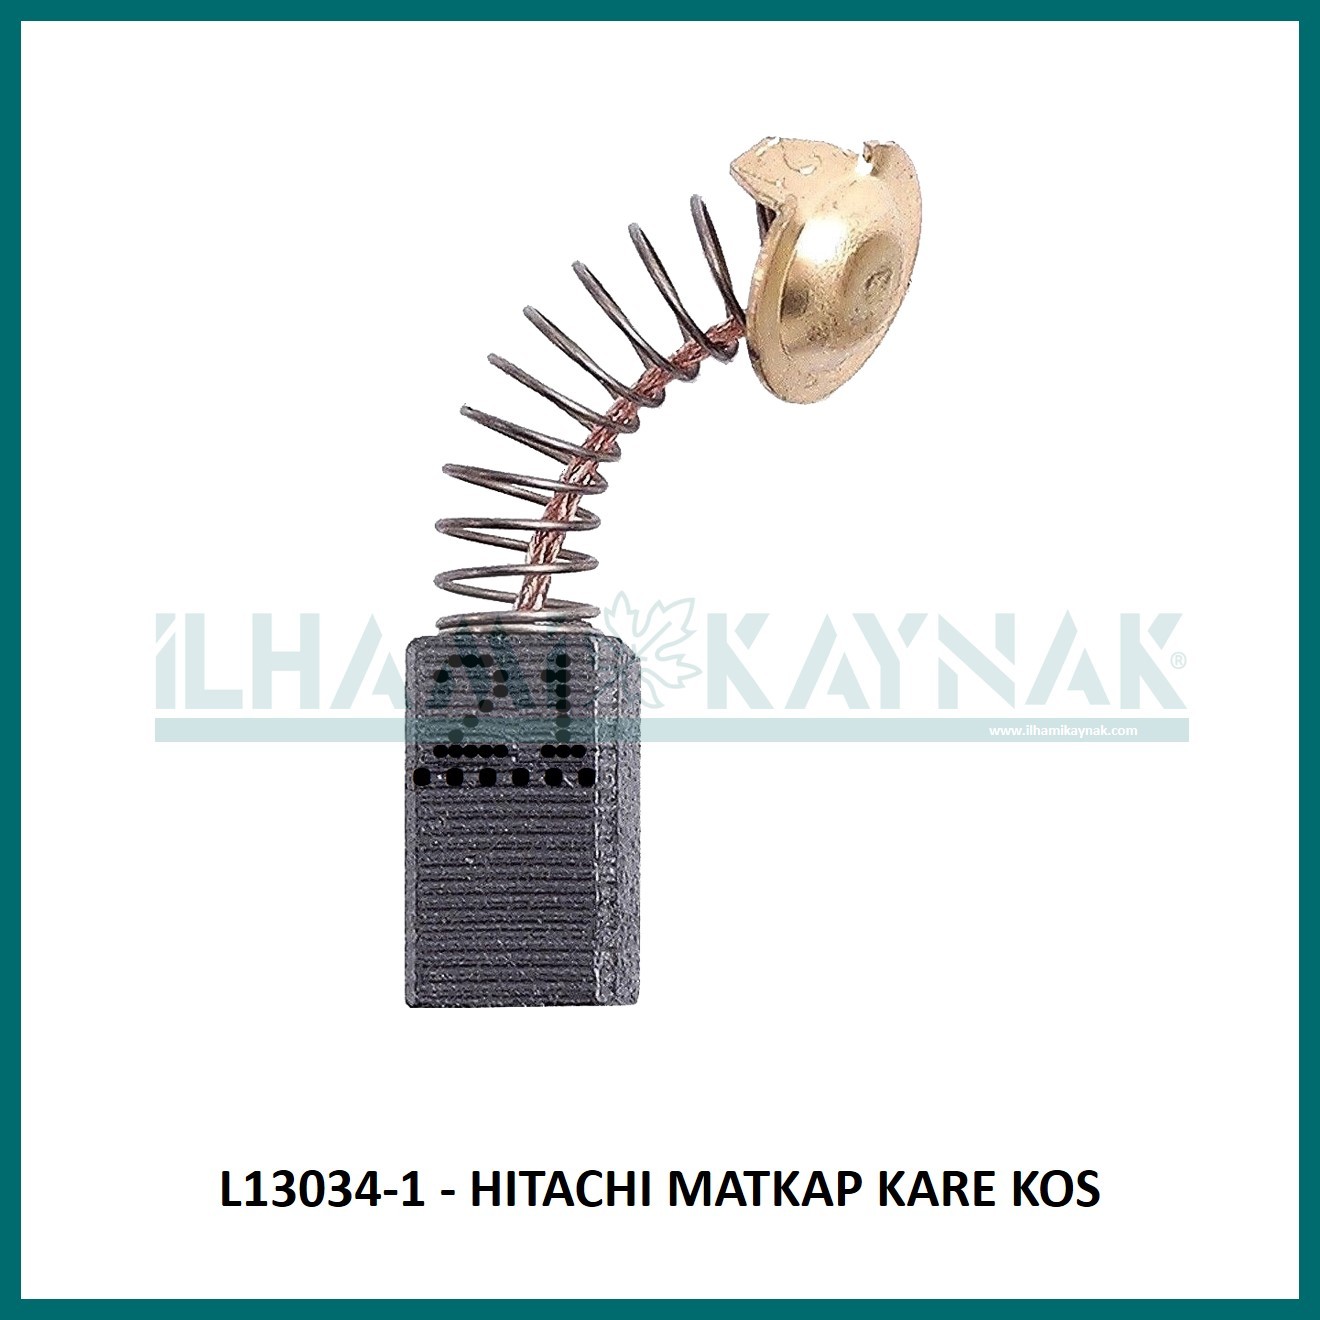 L13034-1 - HITACHI MATKAP KARE KOS - 6,5*7,5*13 mm - 100 Adet